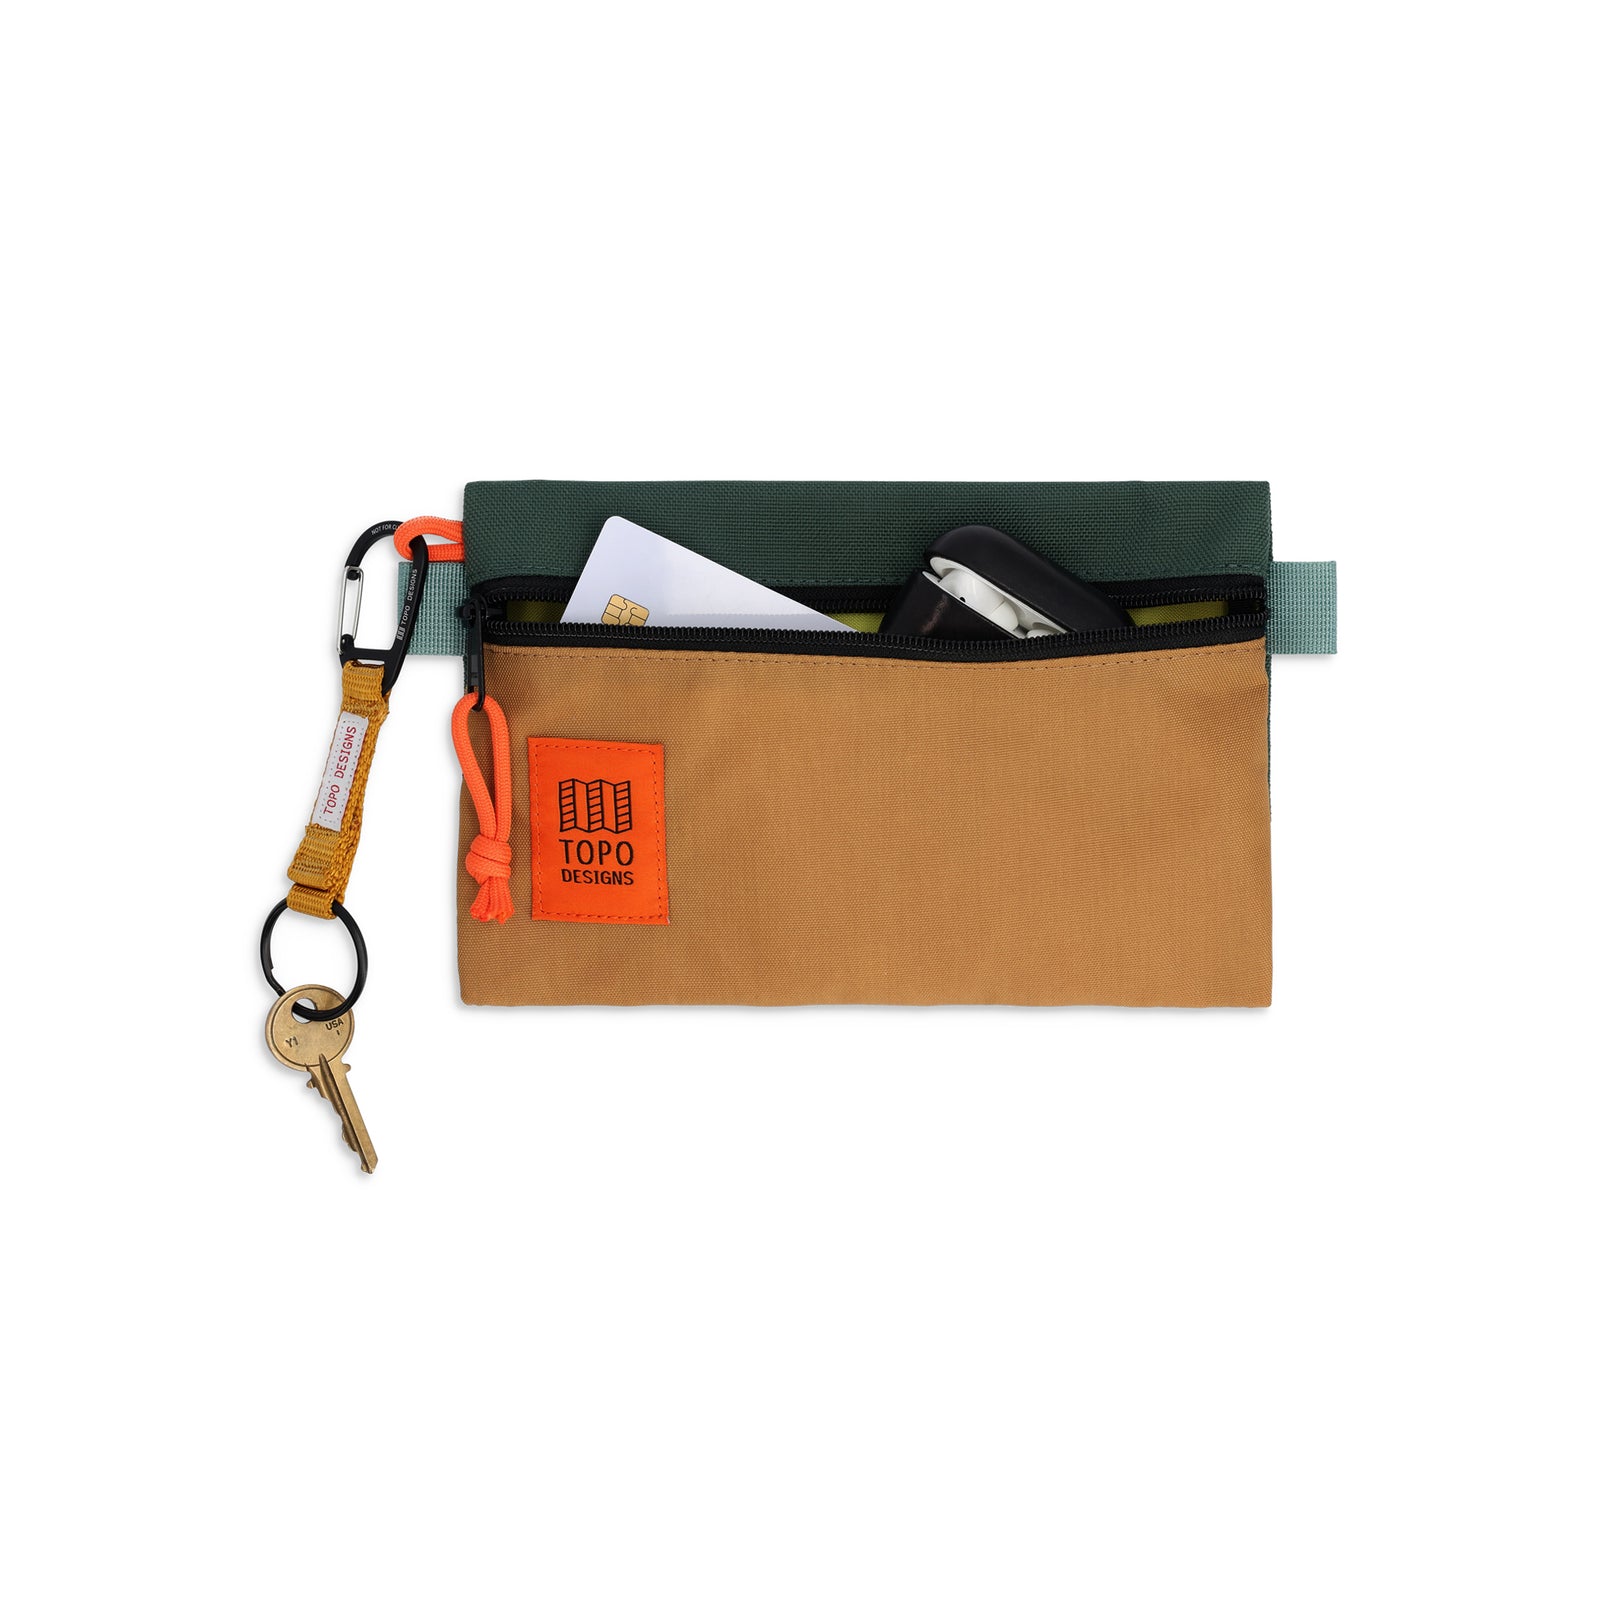 General shot Topo Designs Accessory Bag "Small" in "Khaki / Forest"